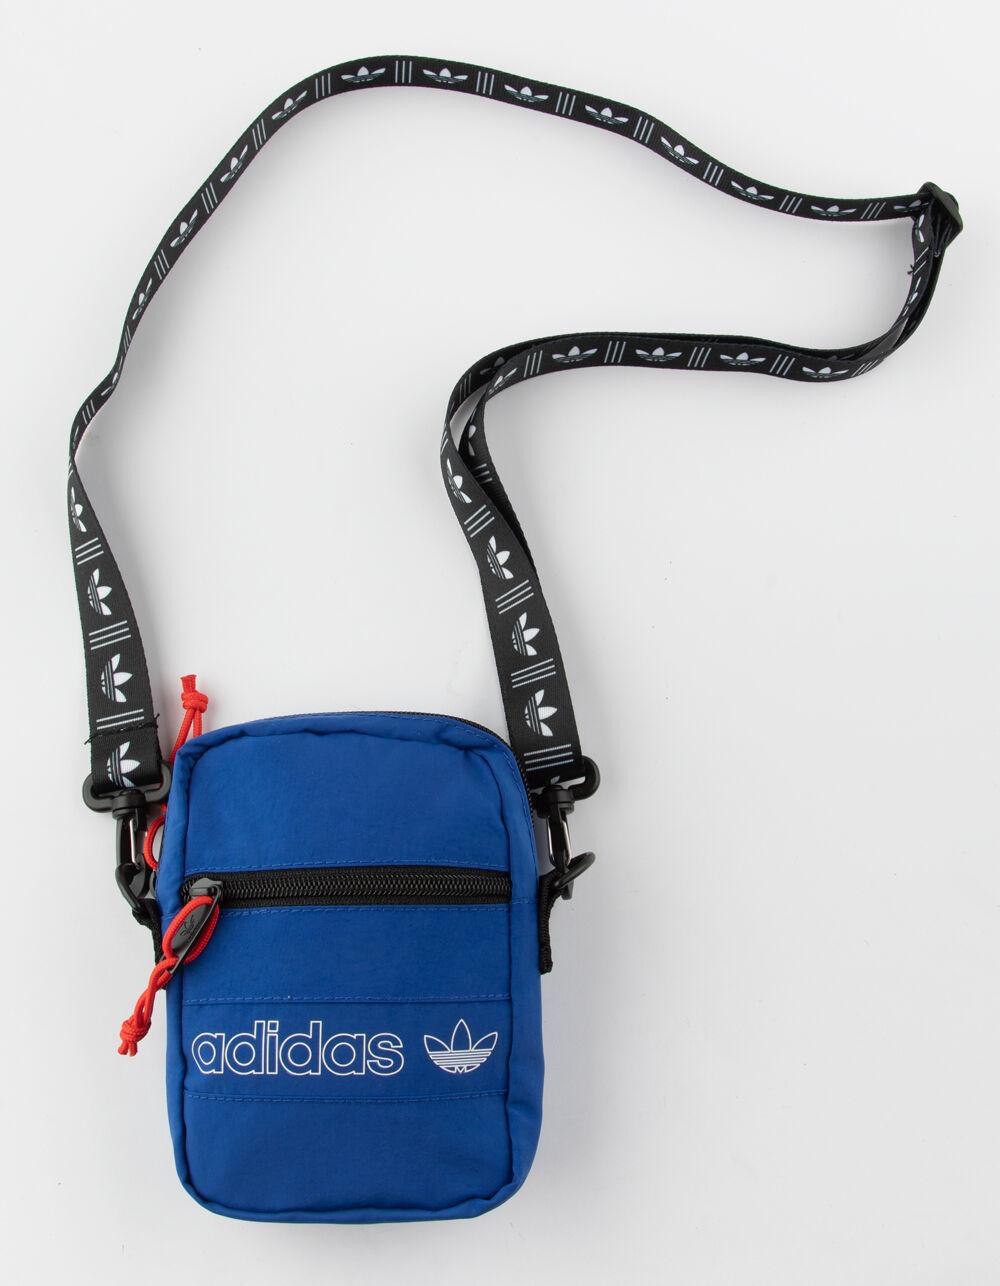 adidas crossbody bag blue